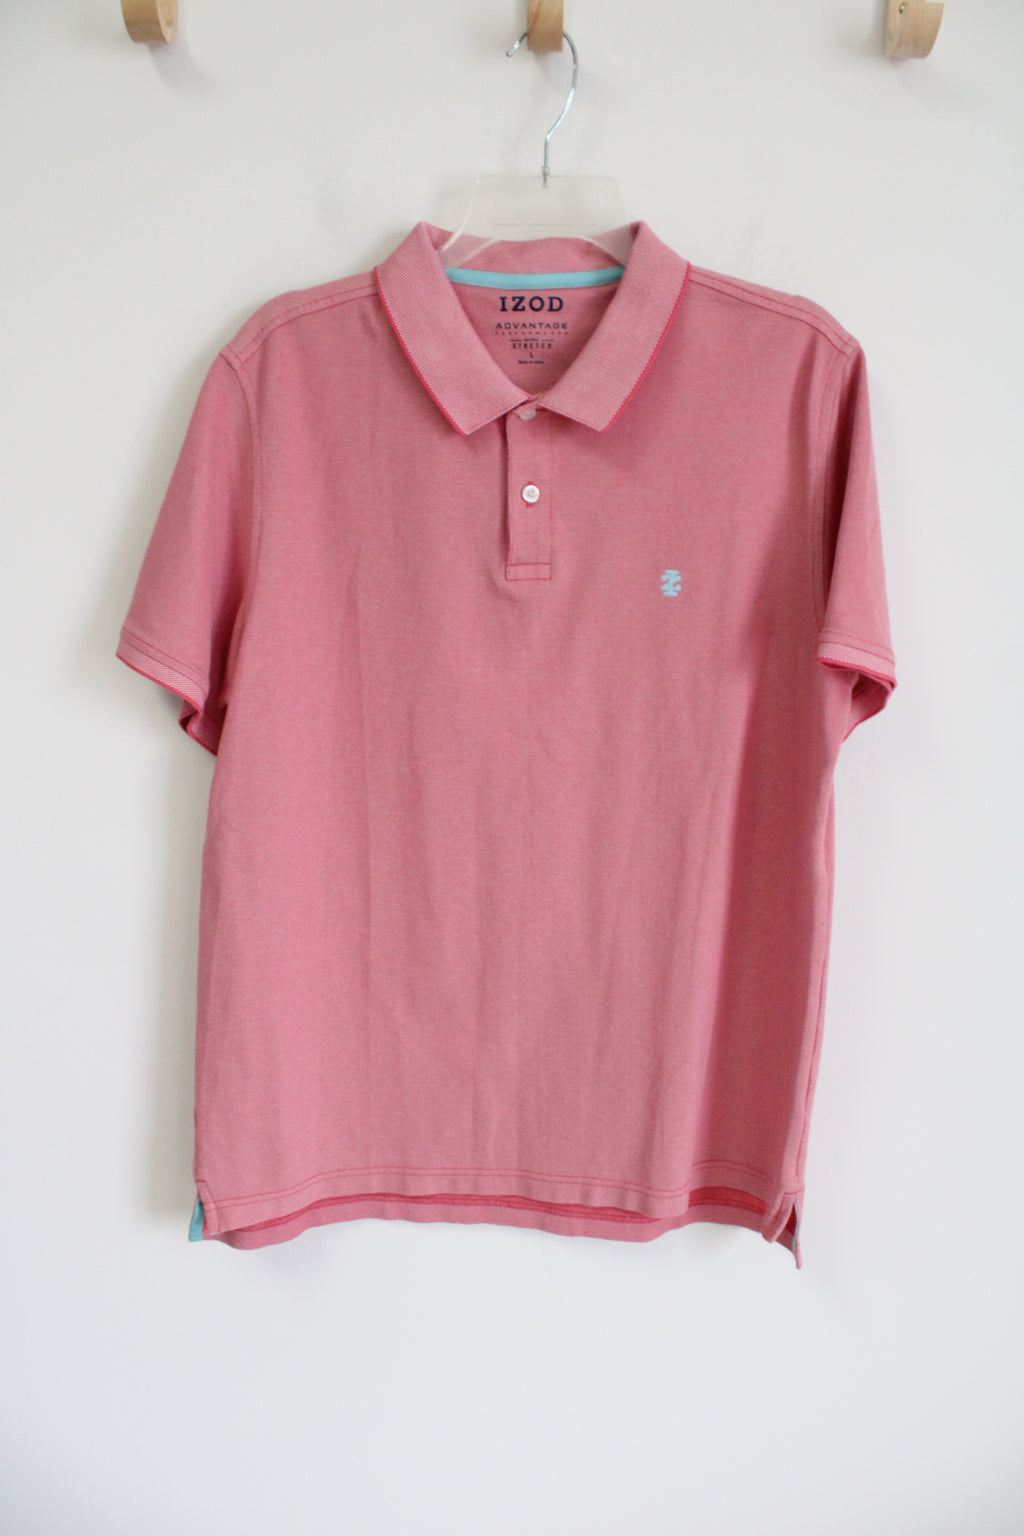 Izod Advantage Performance Pink Polo Natural Stretch Shirt | L